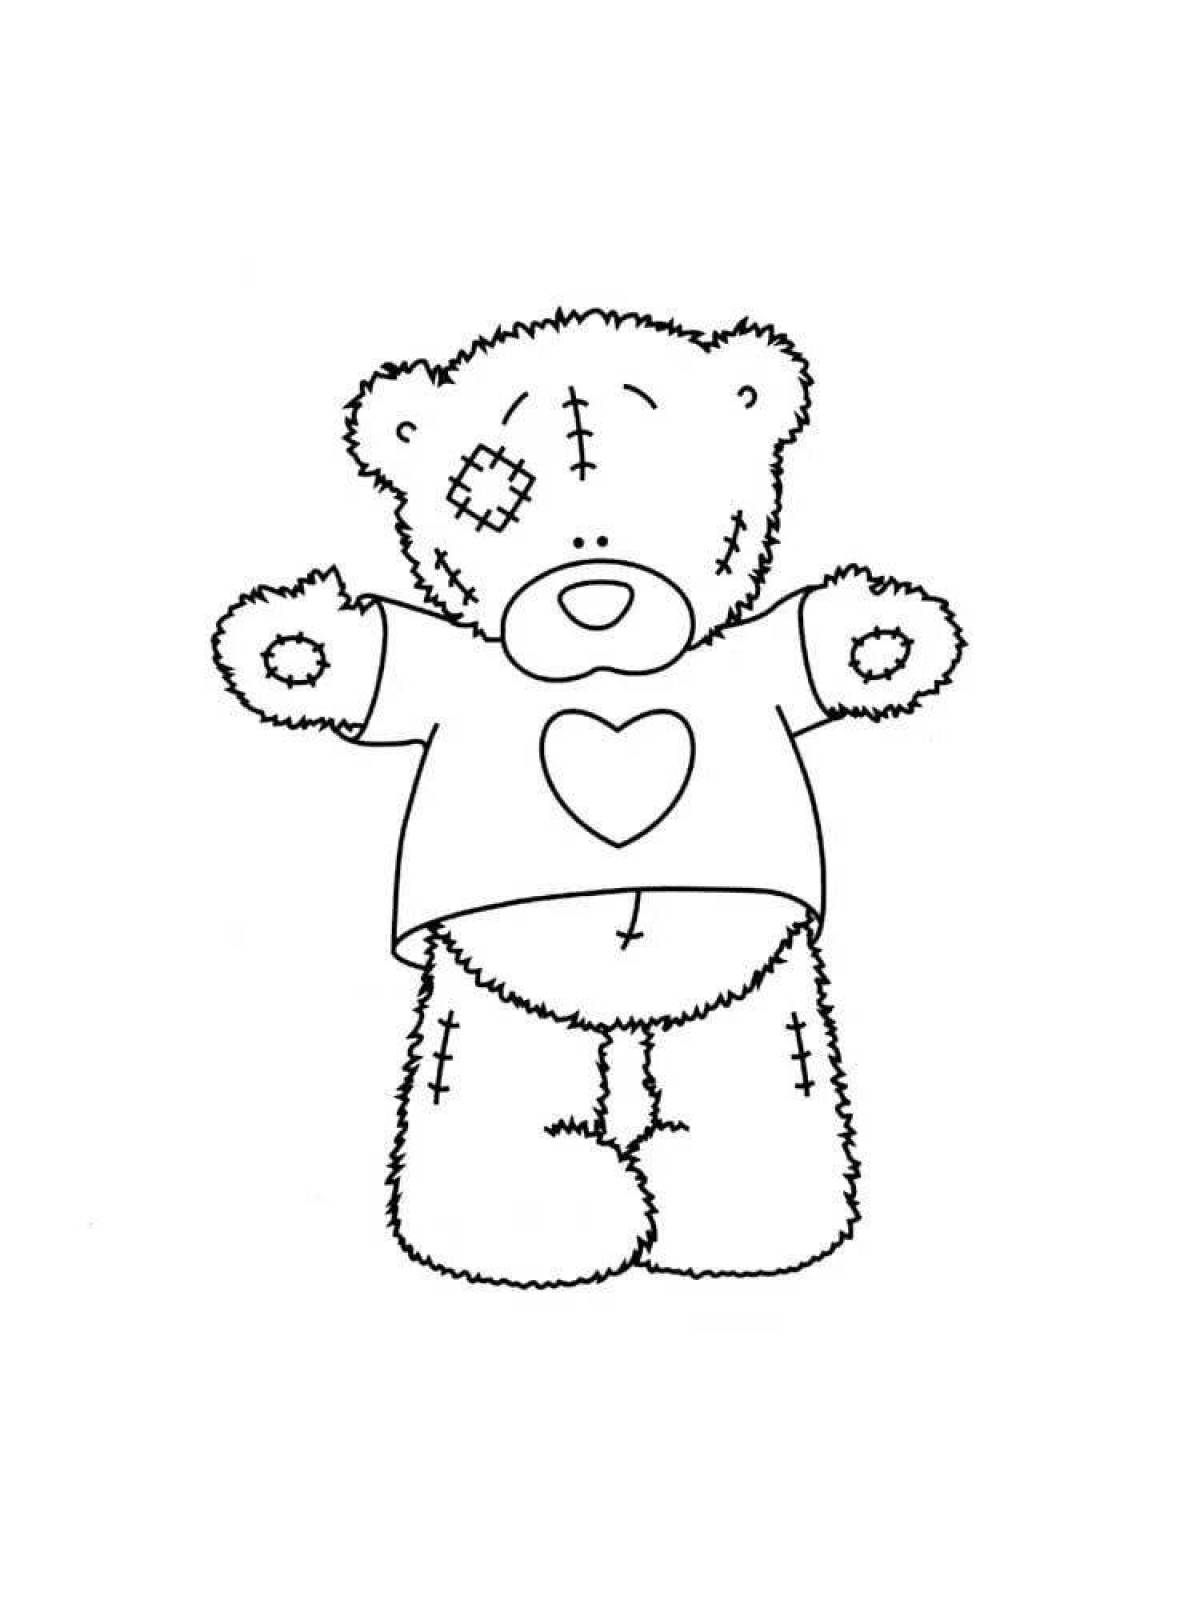 Cute cute bear coloring page